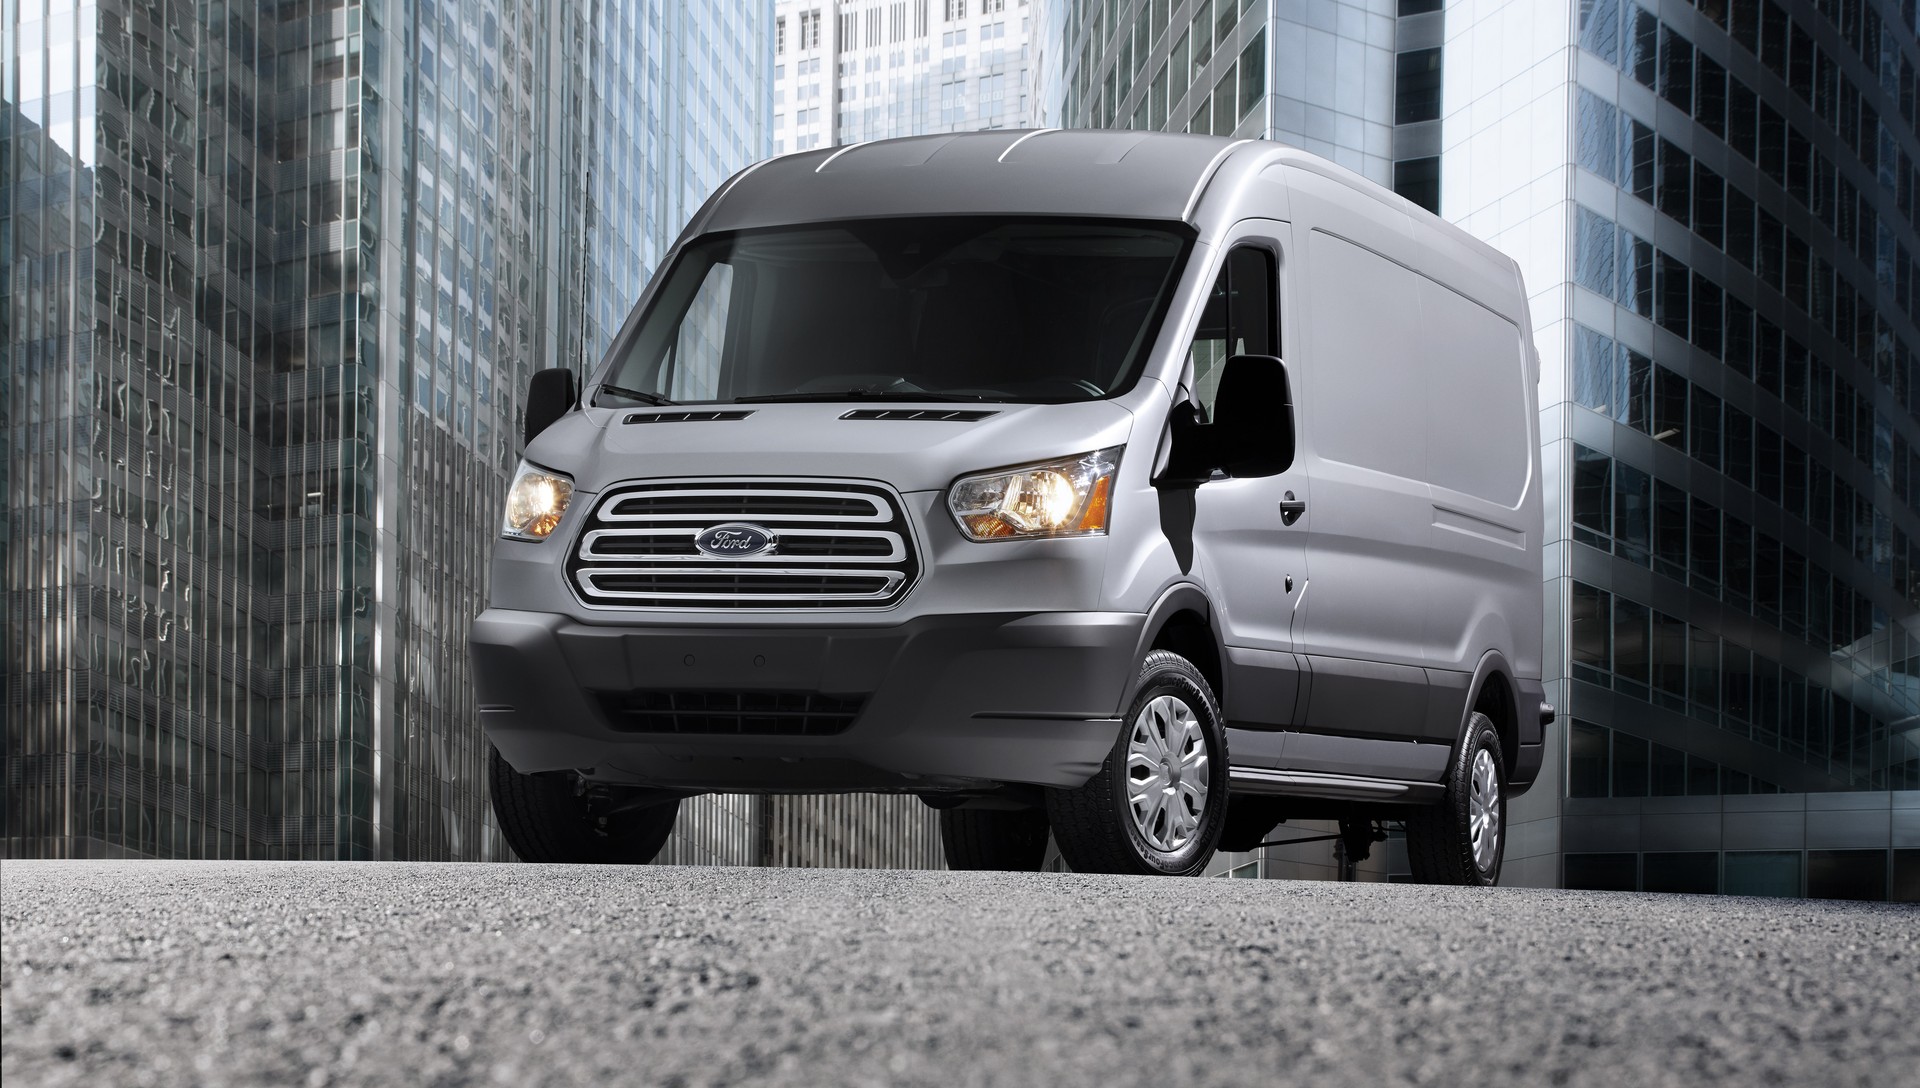 Ford Transit Van Gets Add-In Hybrid Kit For Better Economy